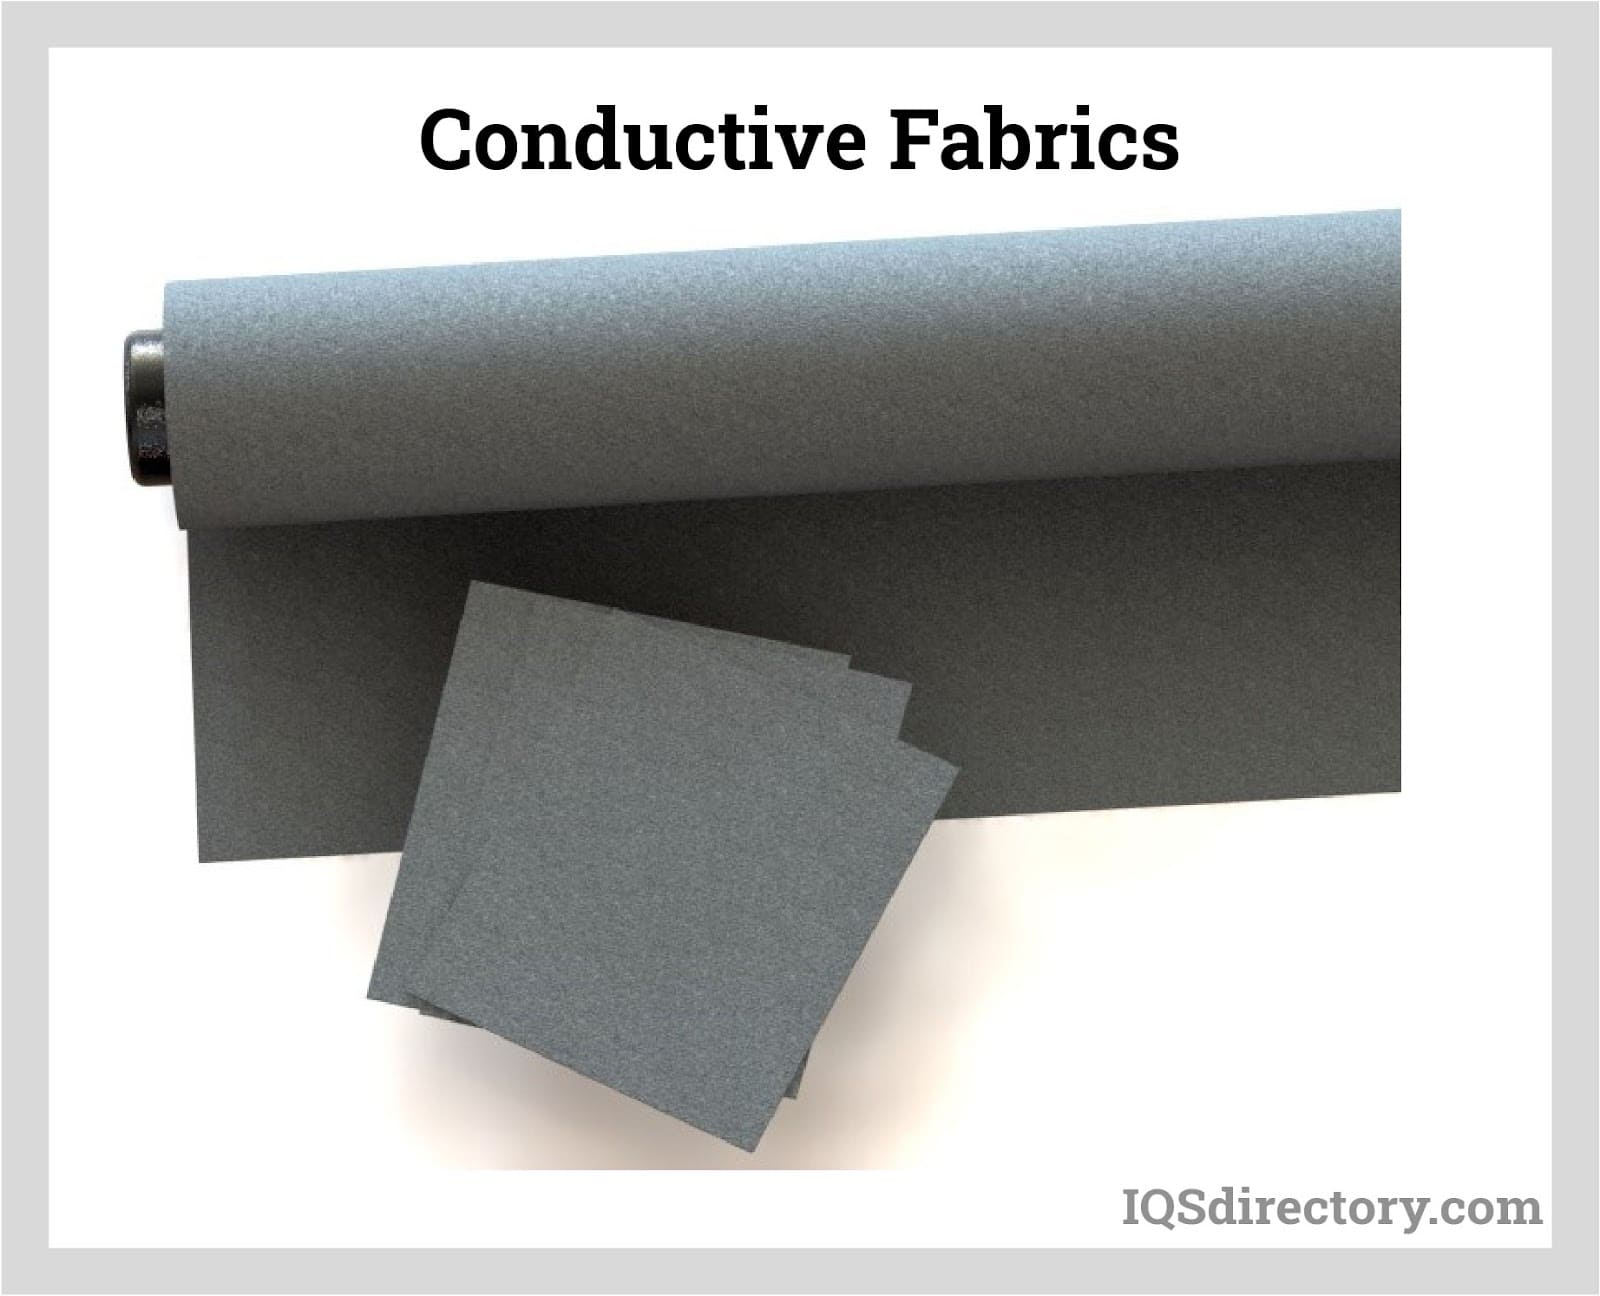 Conductive Fabrics